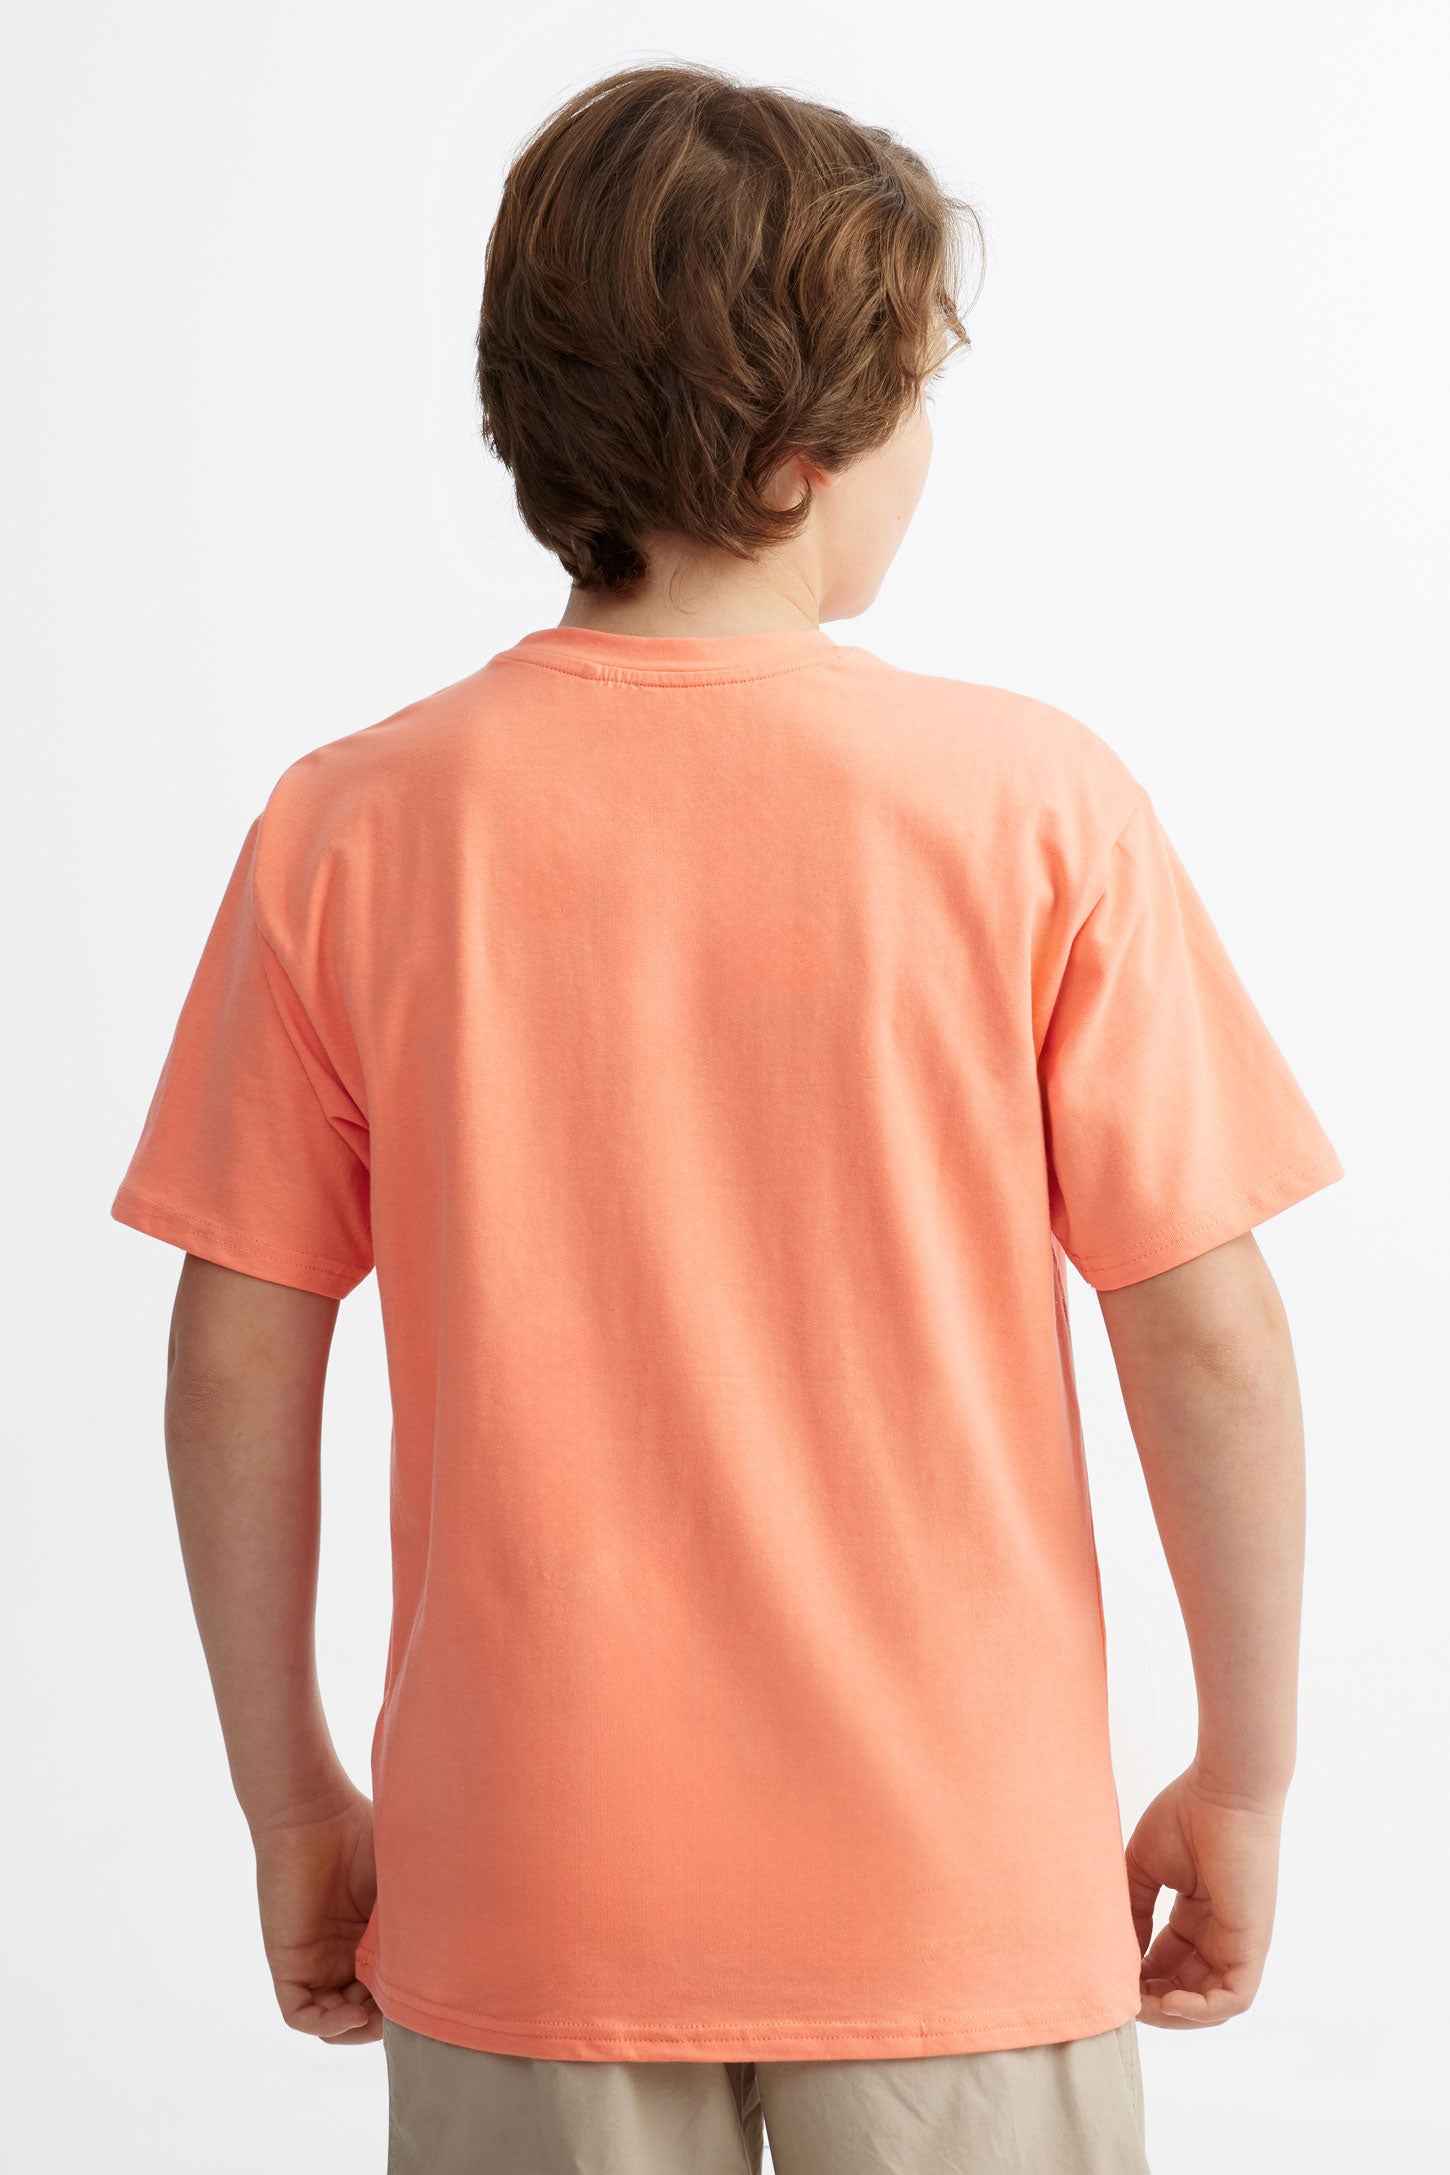 T-shirt imprimé en coton, 2/25$ - Ado garçon && ORANGE